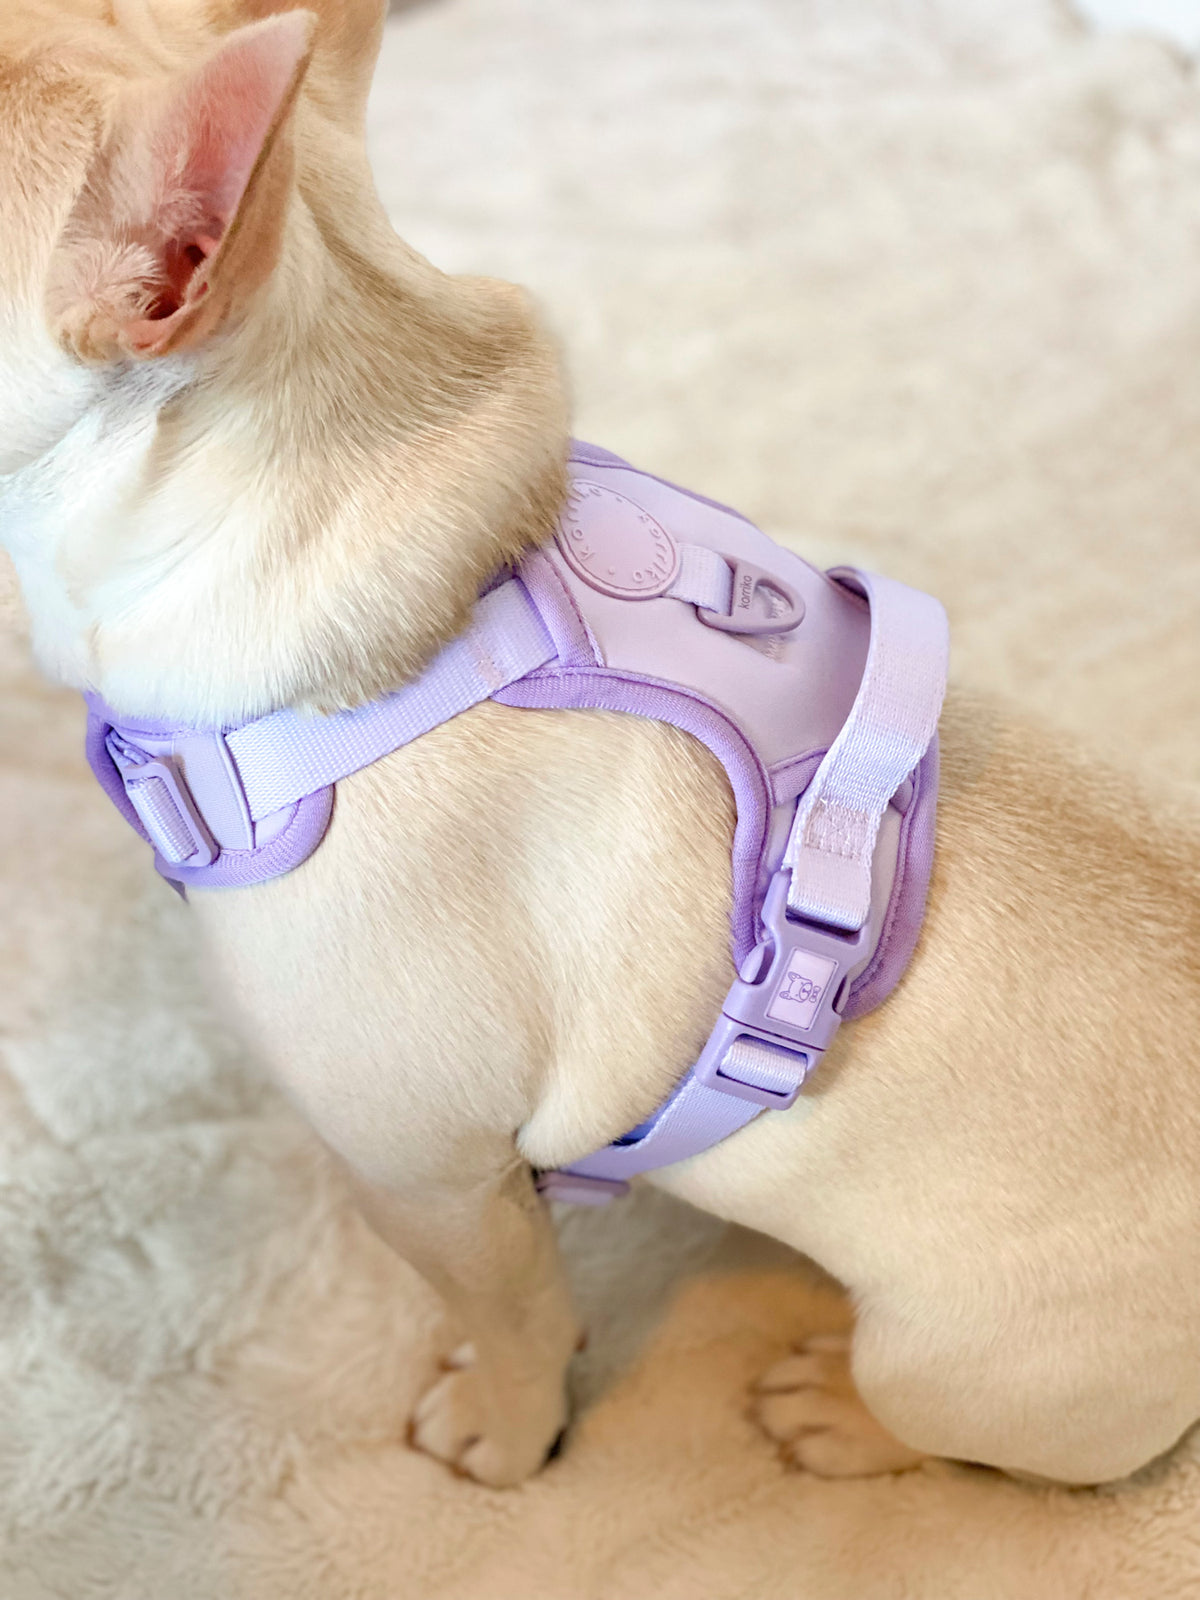 Korriko Pet Supply - Dog Harnesses, Collars, Leashes, Apparel + More